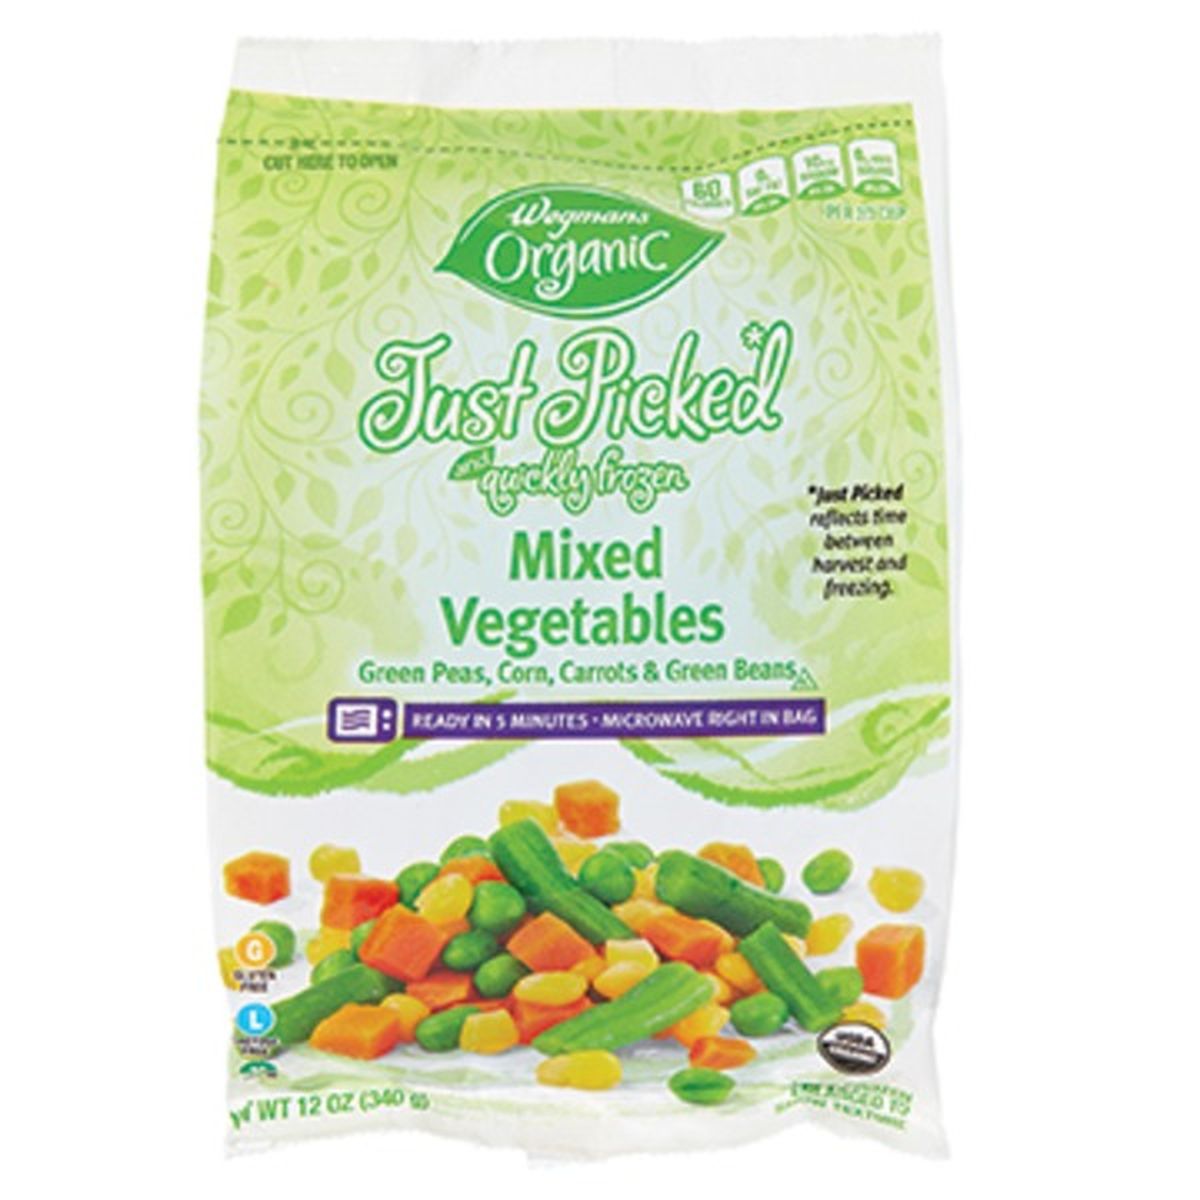 Calories in Wegmans Organic Microwaveable Mixed Vegetables